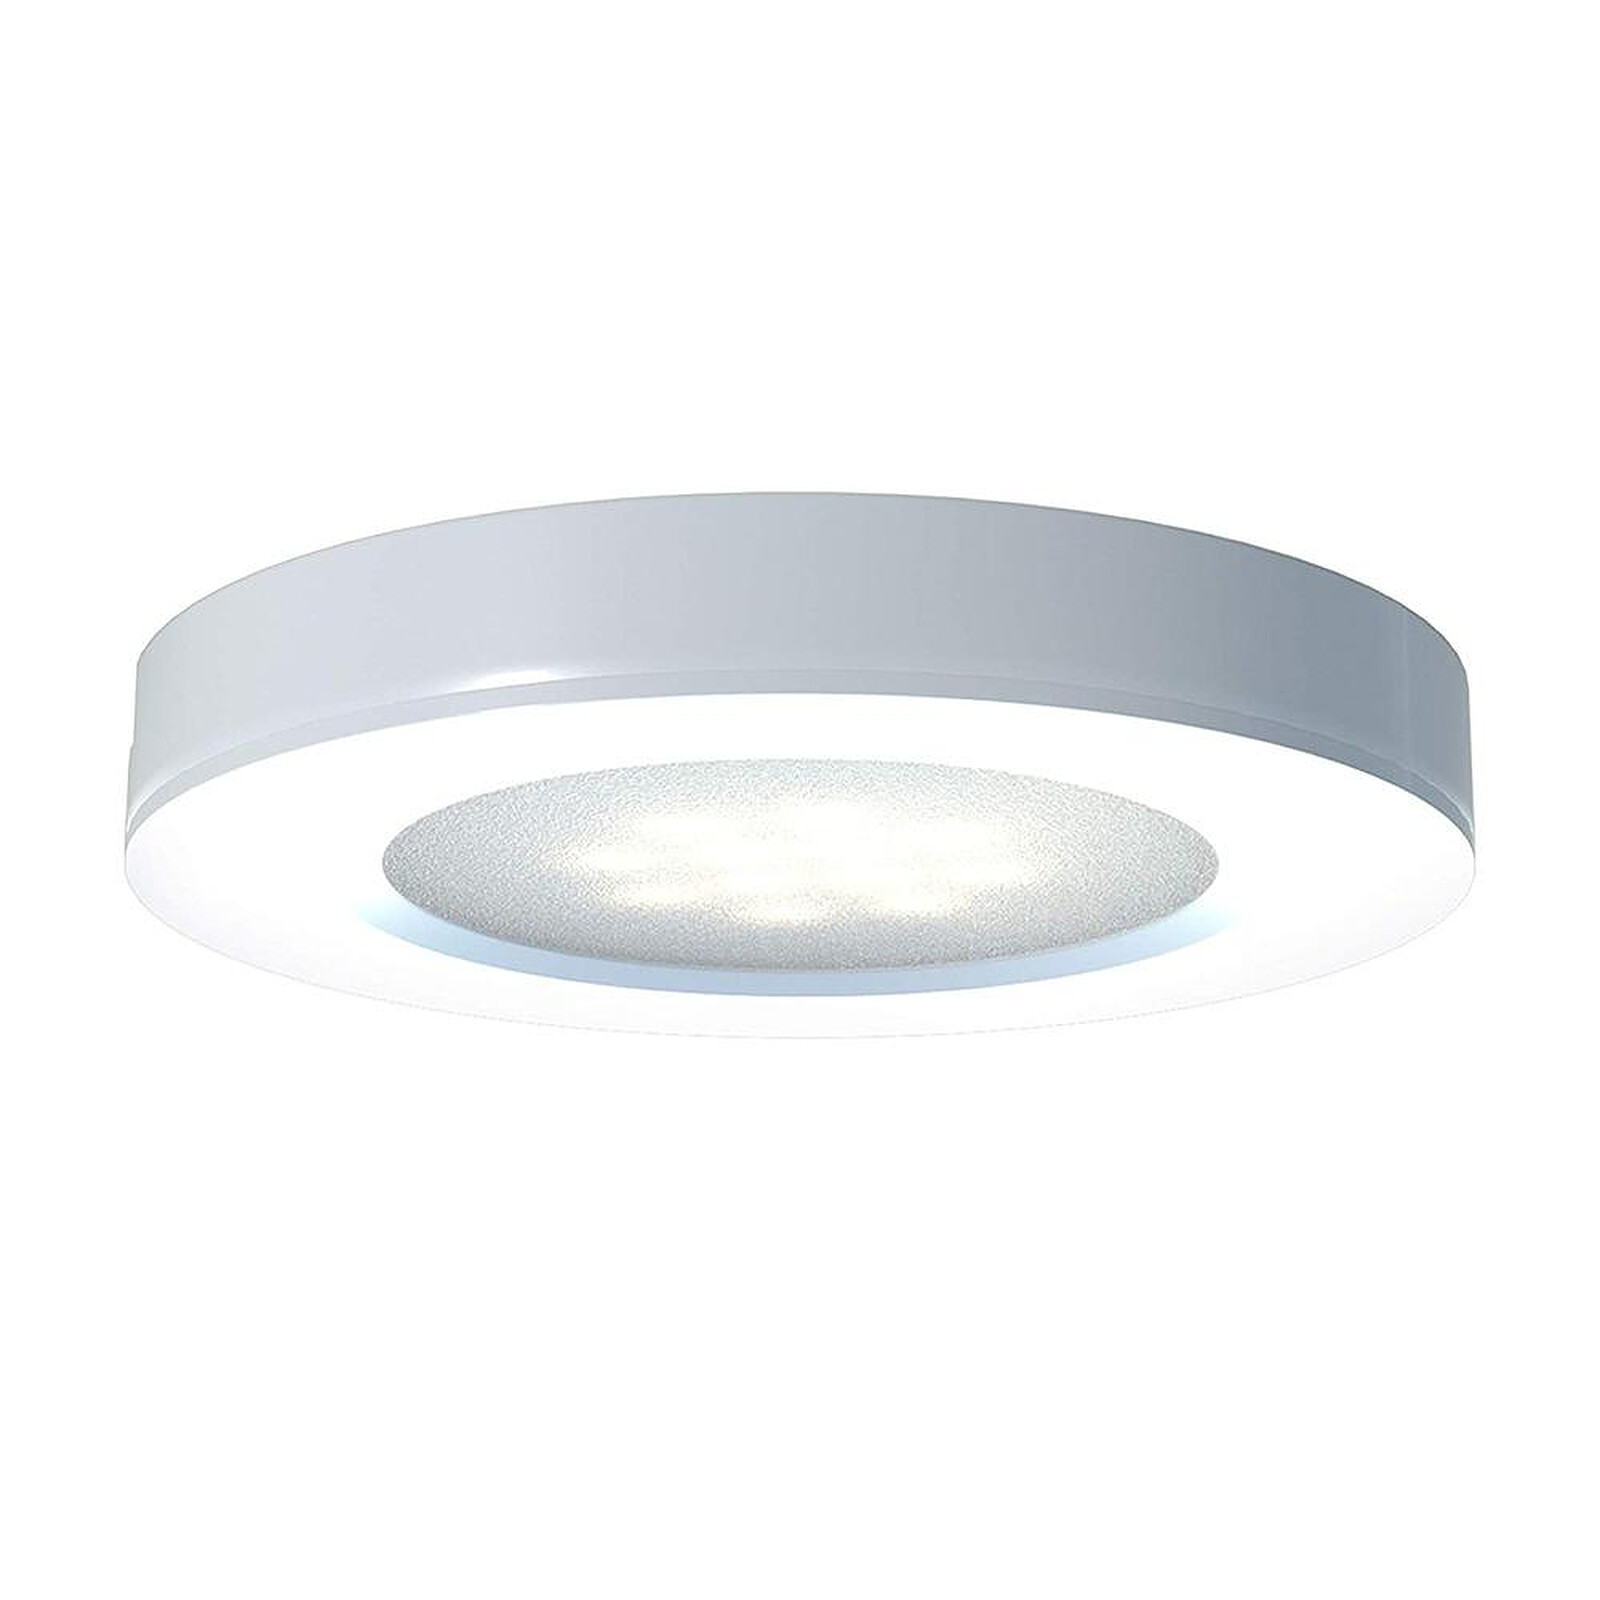 Innr - Spot LED connecté encastrable Blanc extra-plat - RSL115